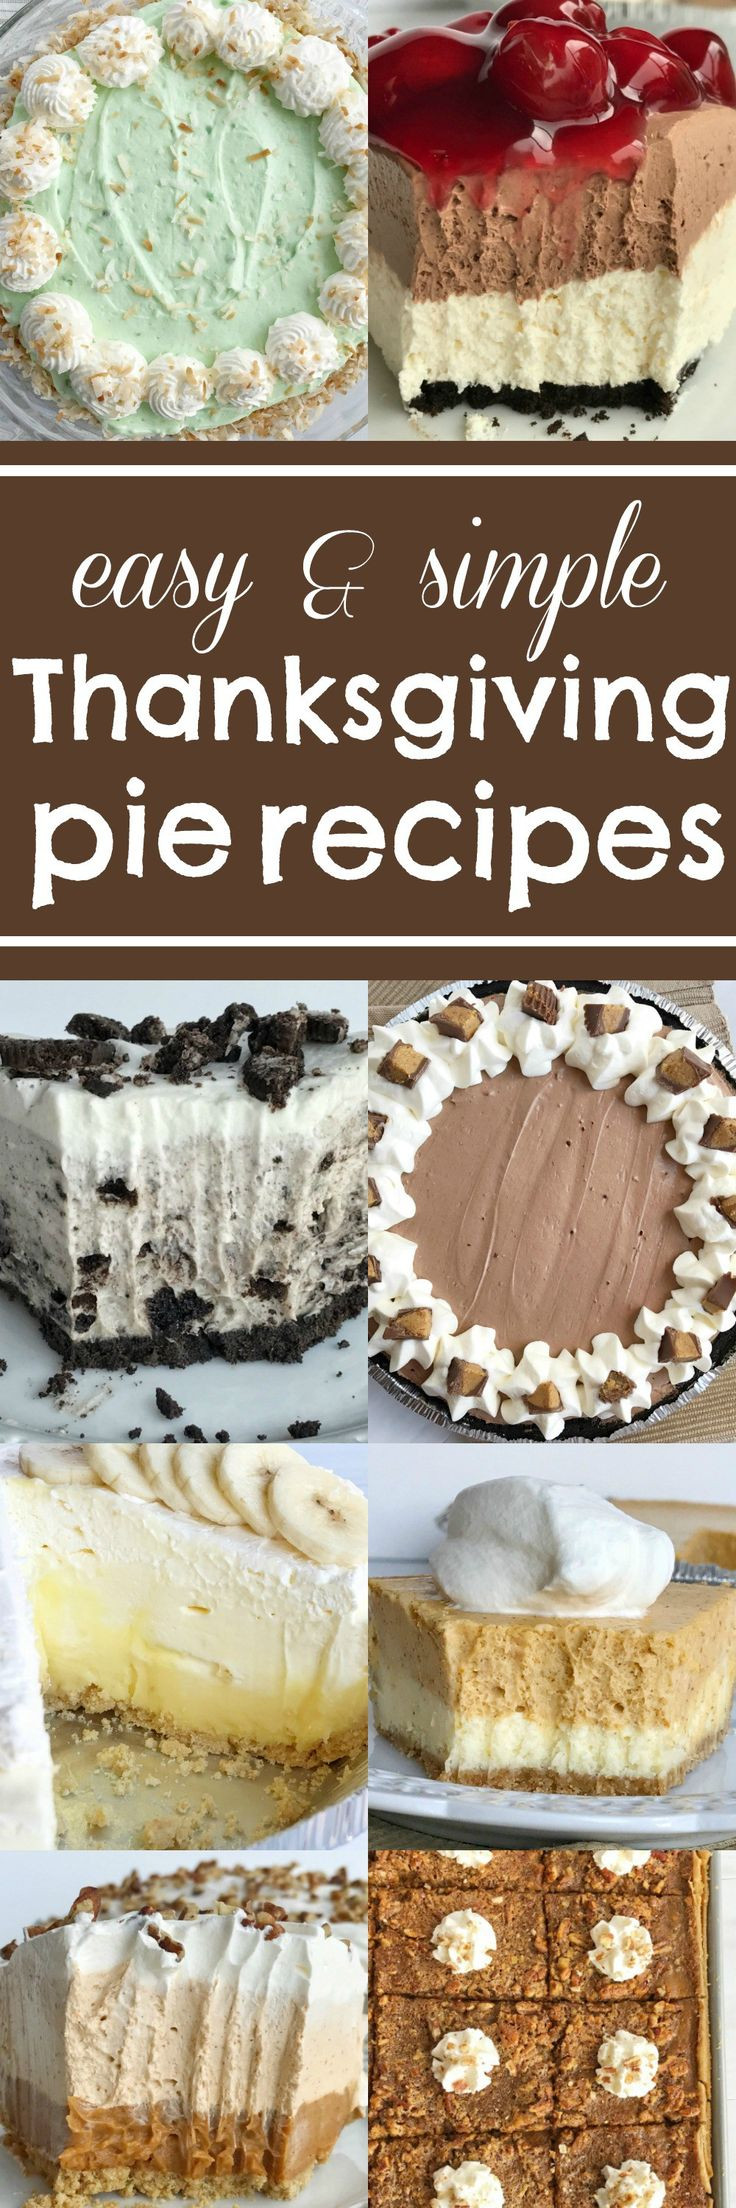 Pie Recipes For Thanksgiving
 Best 25 Thanksgiving desserts ideas on Pinterest